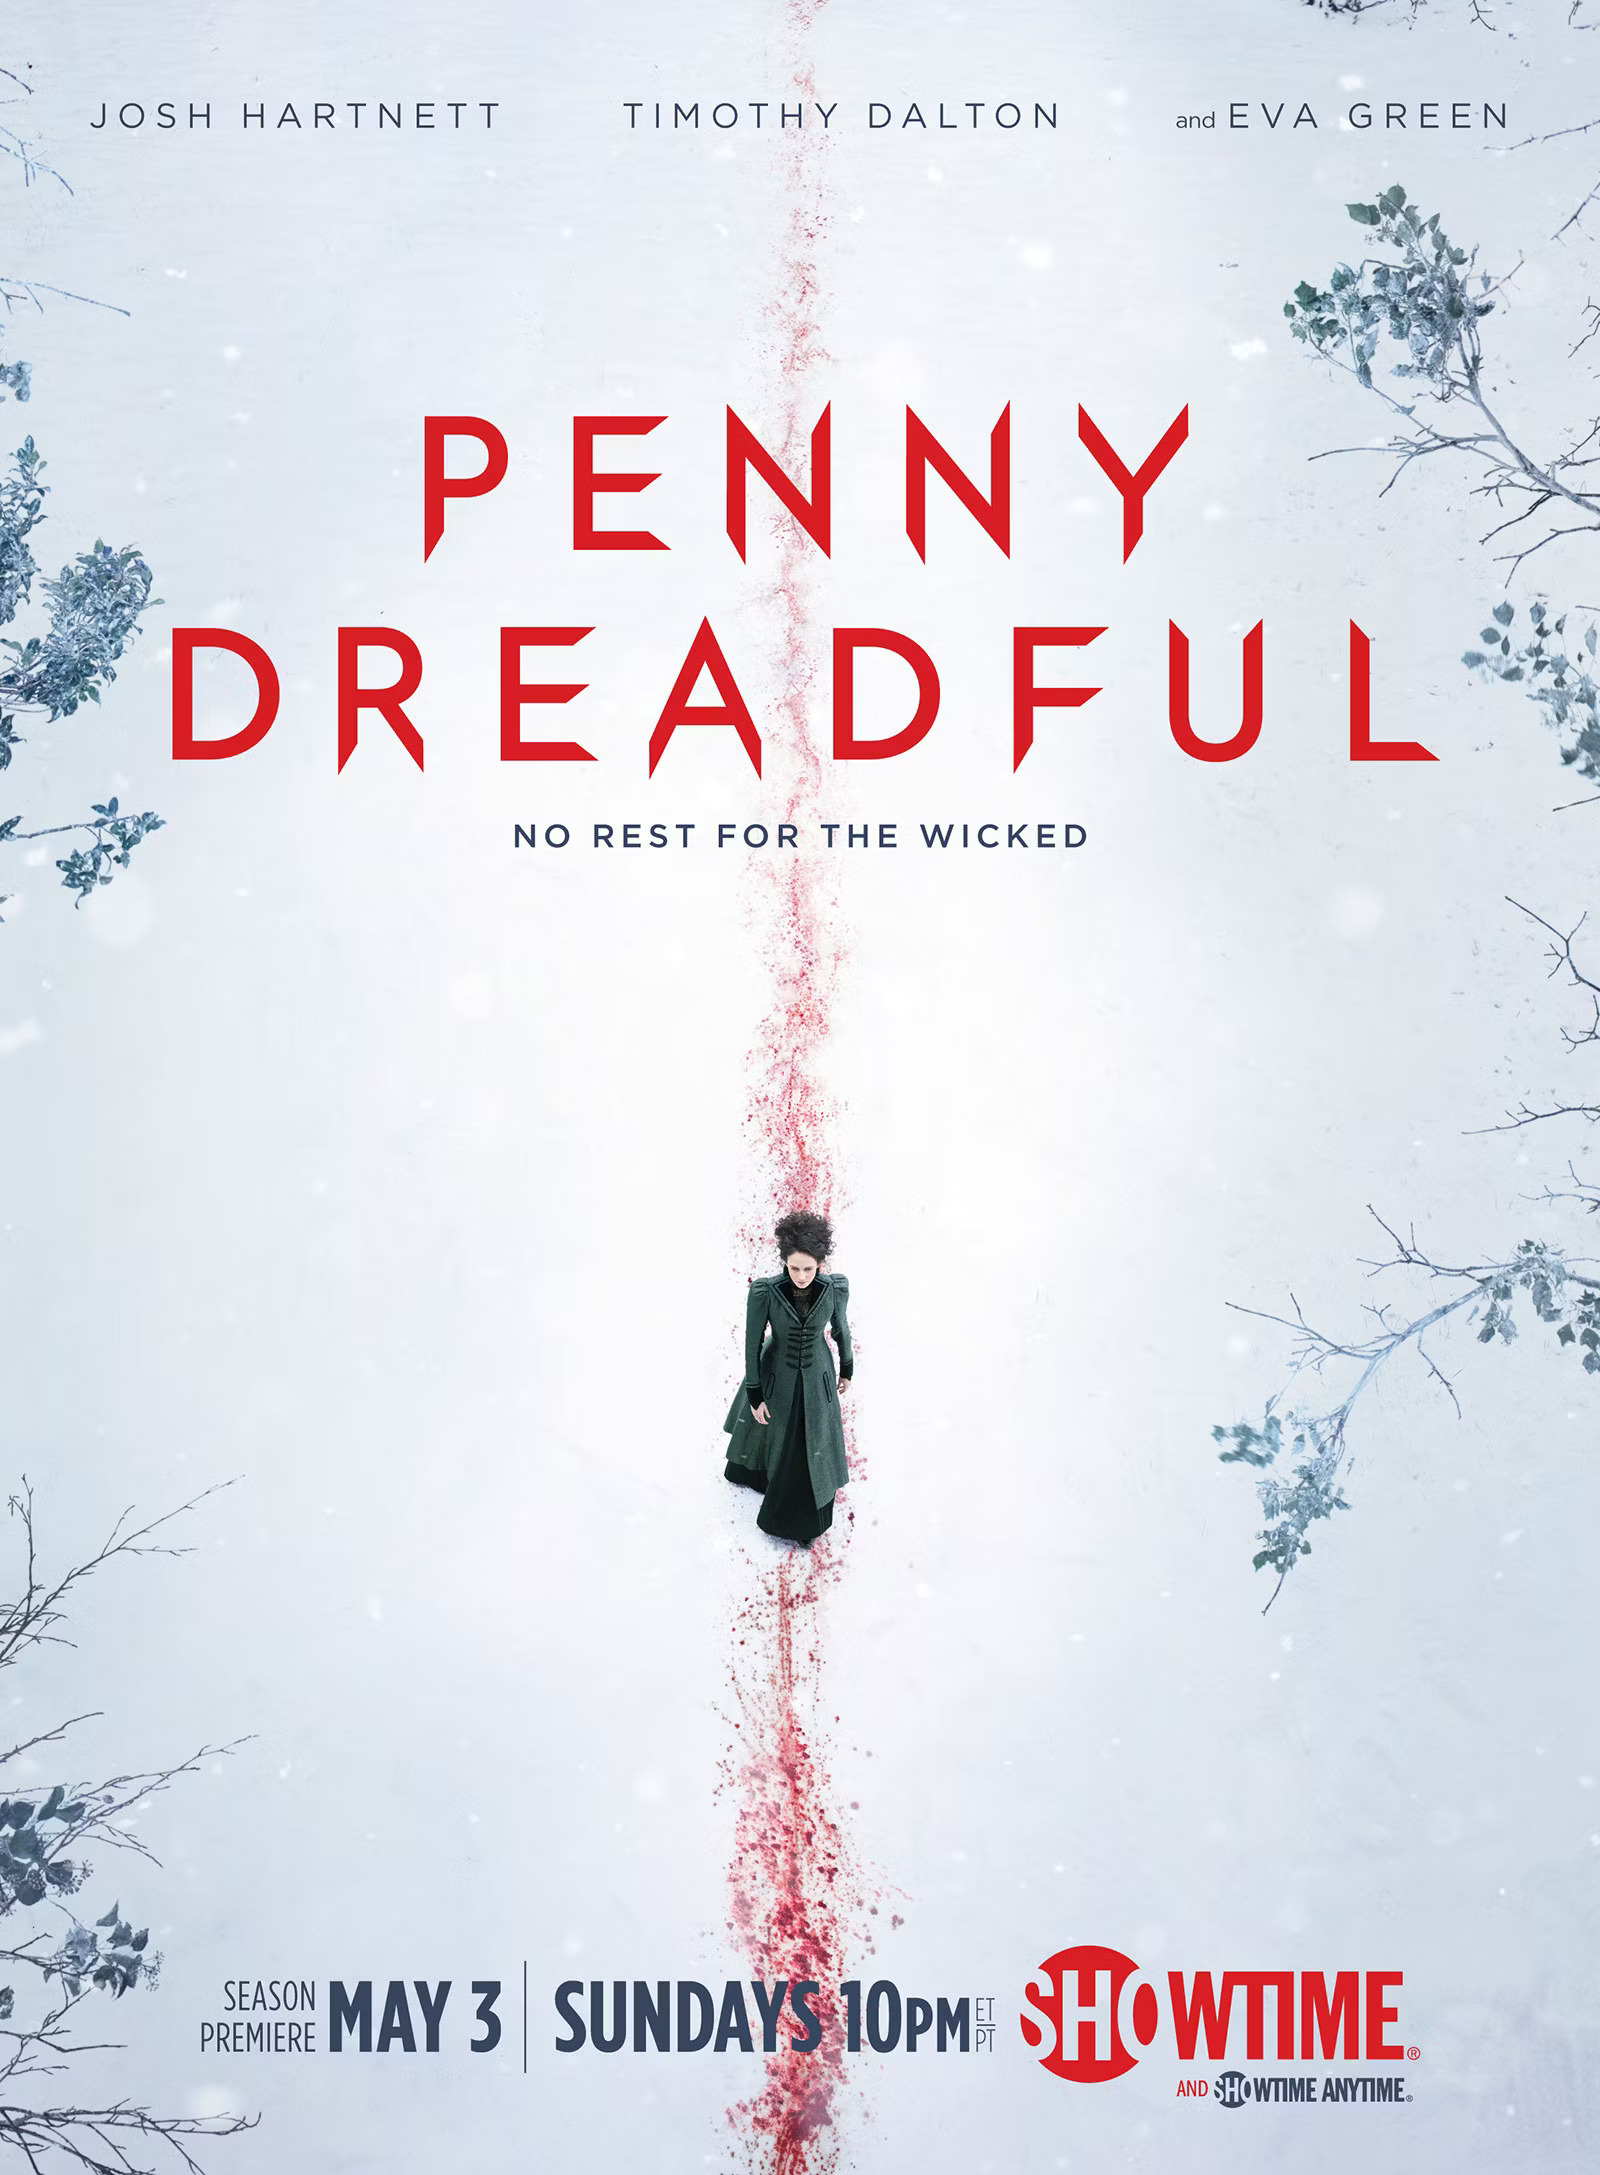 Penny Dreadful S02 (2015) 1080p BluRay DD5.1 / TrueHD 5.1 NOGRP NL Sub